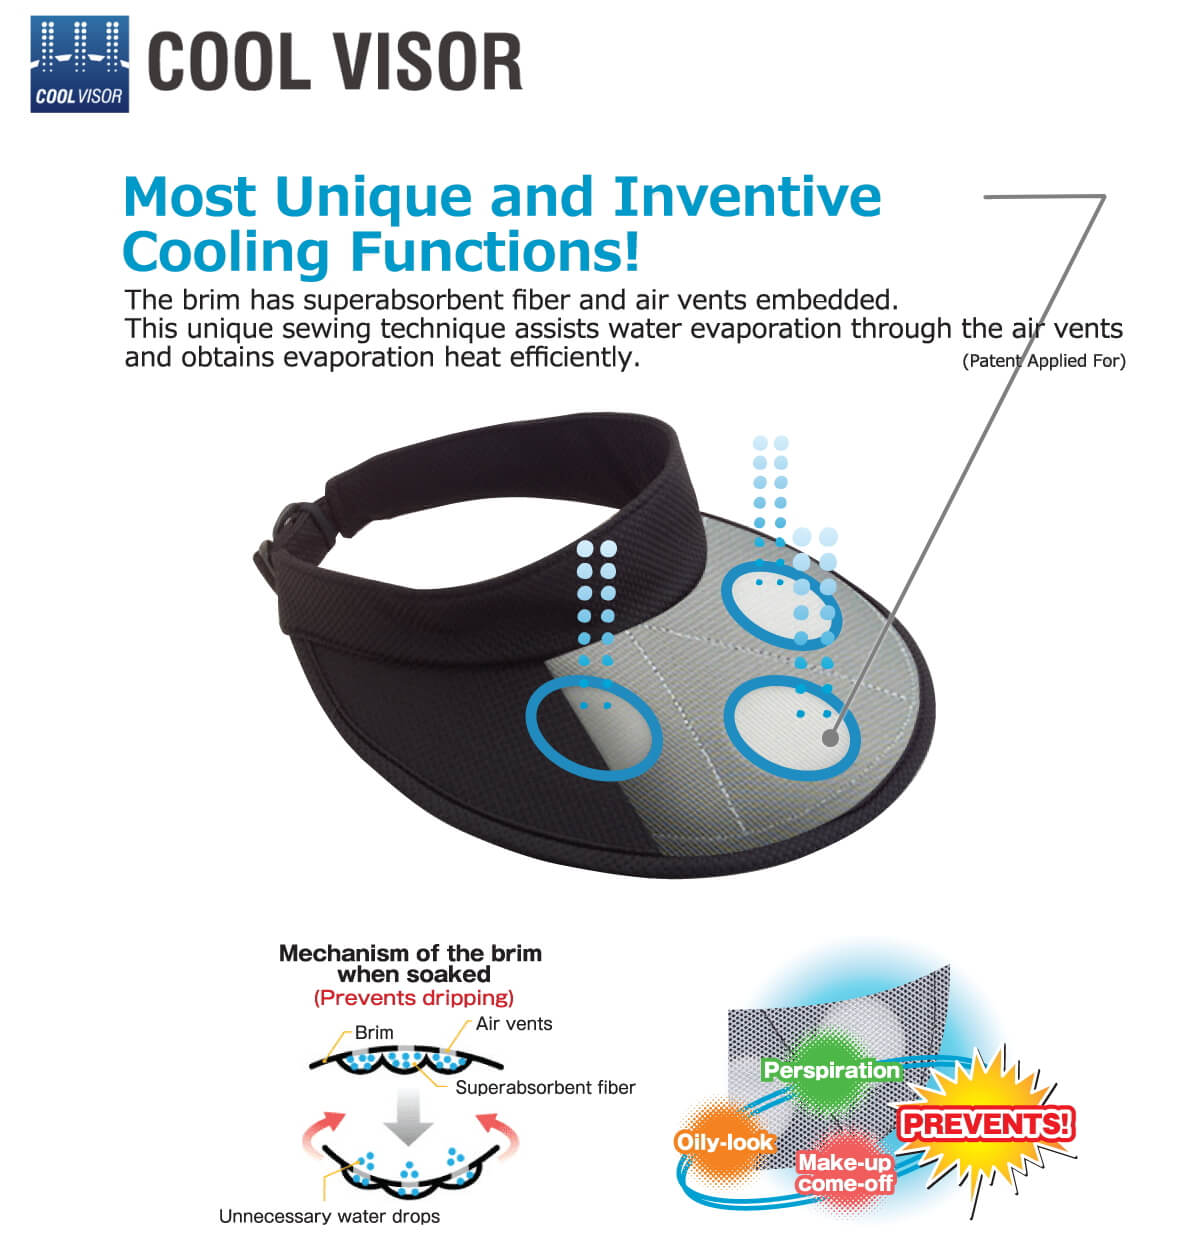 Cool Visor cooling structure